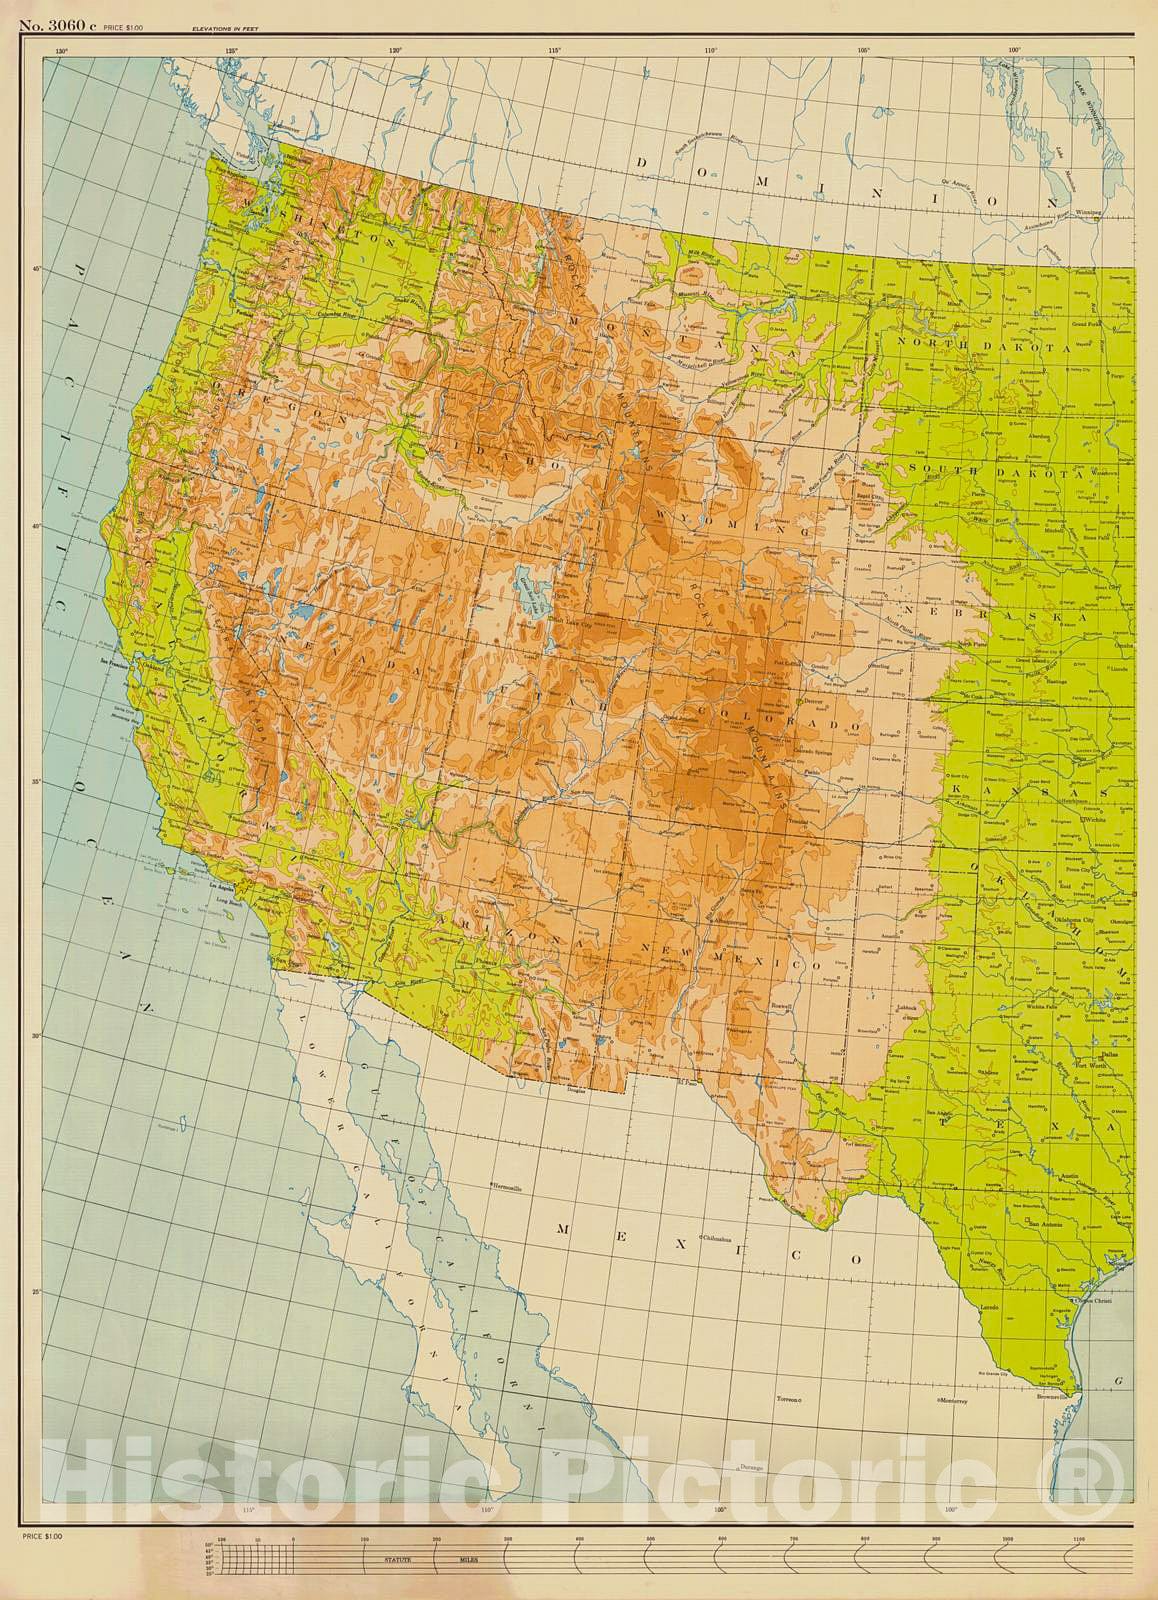 Historic Nautical Map - United States, 1956 NOAA Base Historic Nautical Map - Utah, Nevada, Texas, North Dakota (UT, NV, TX, ND) - Vintage Wall Art